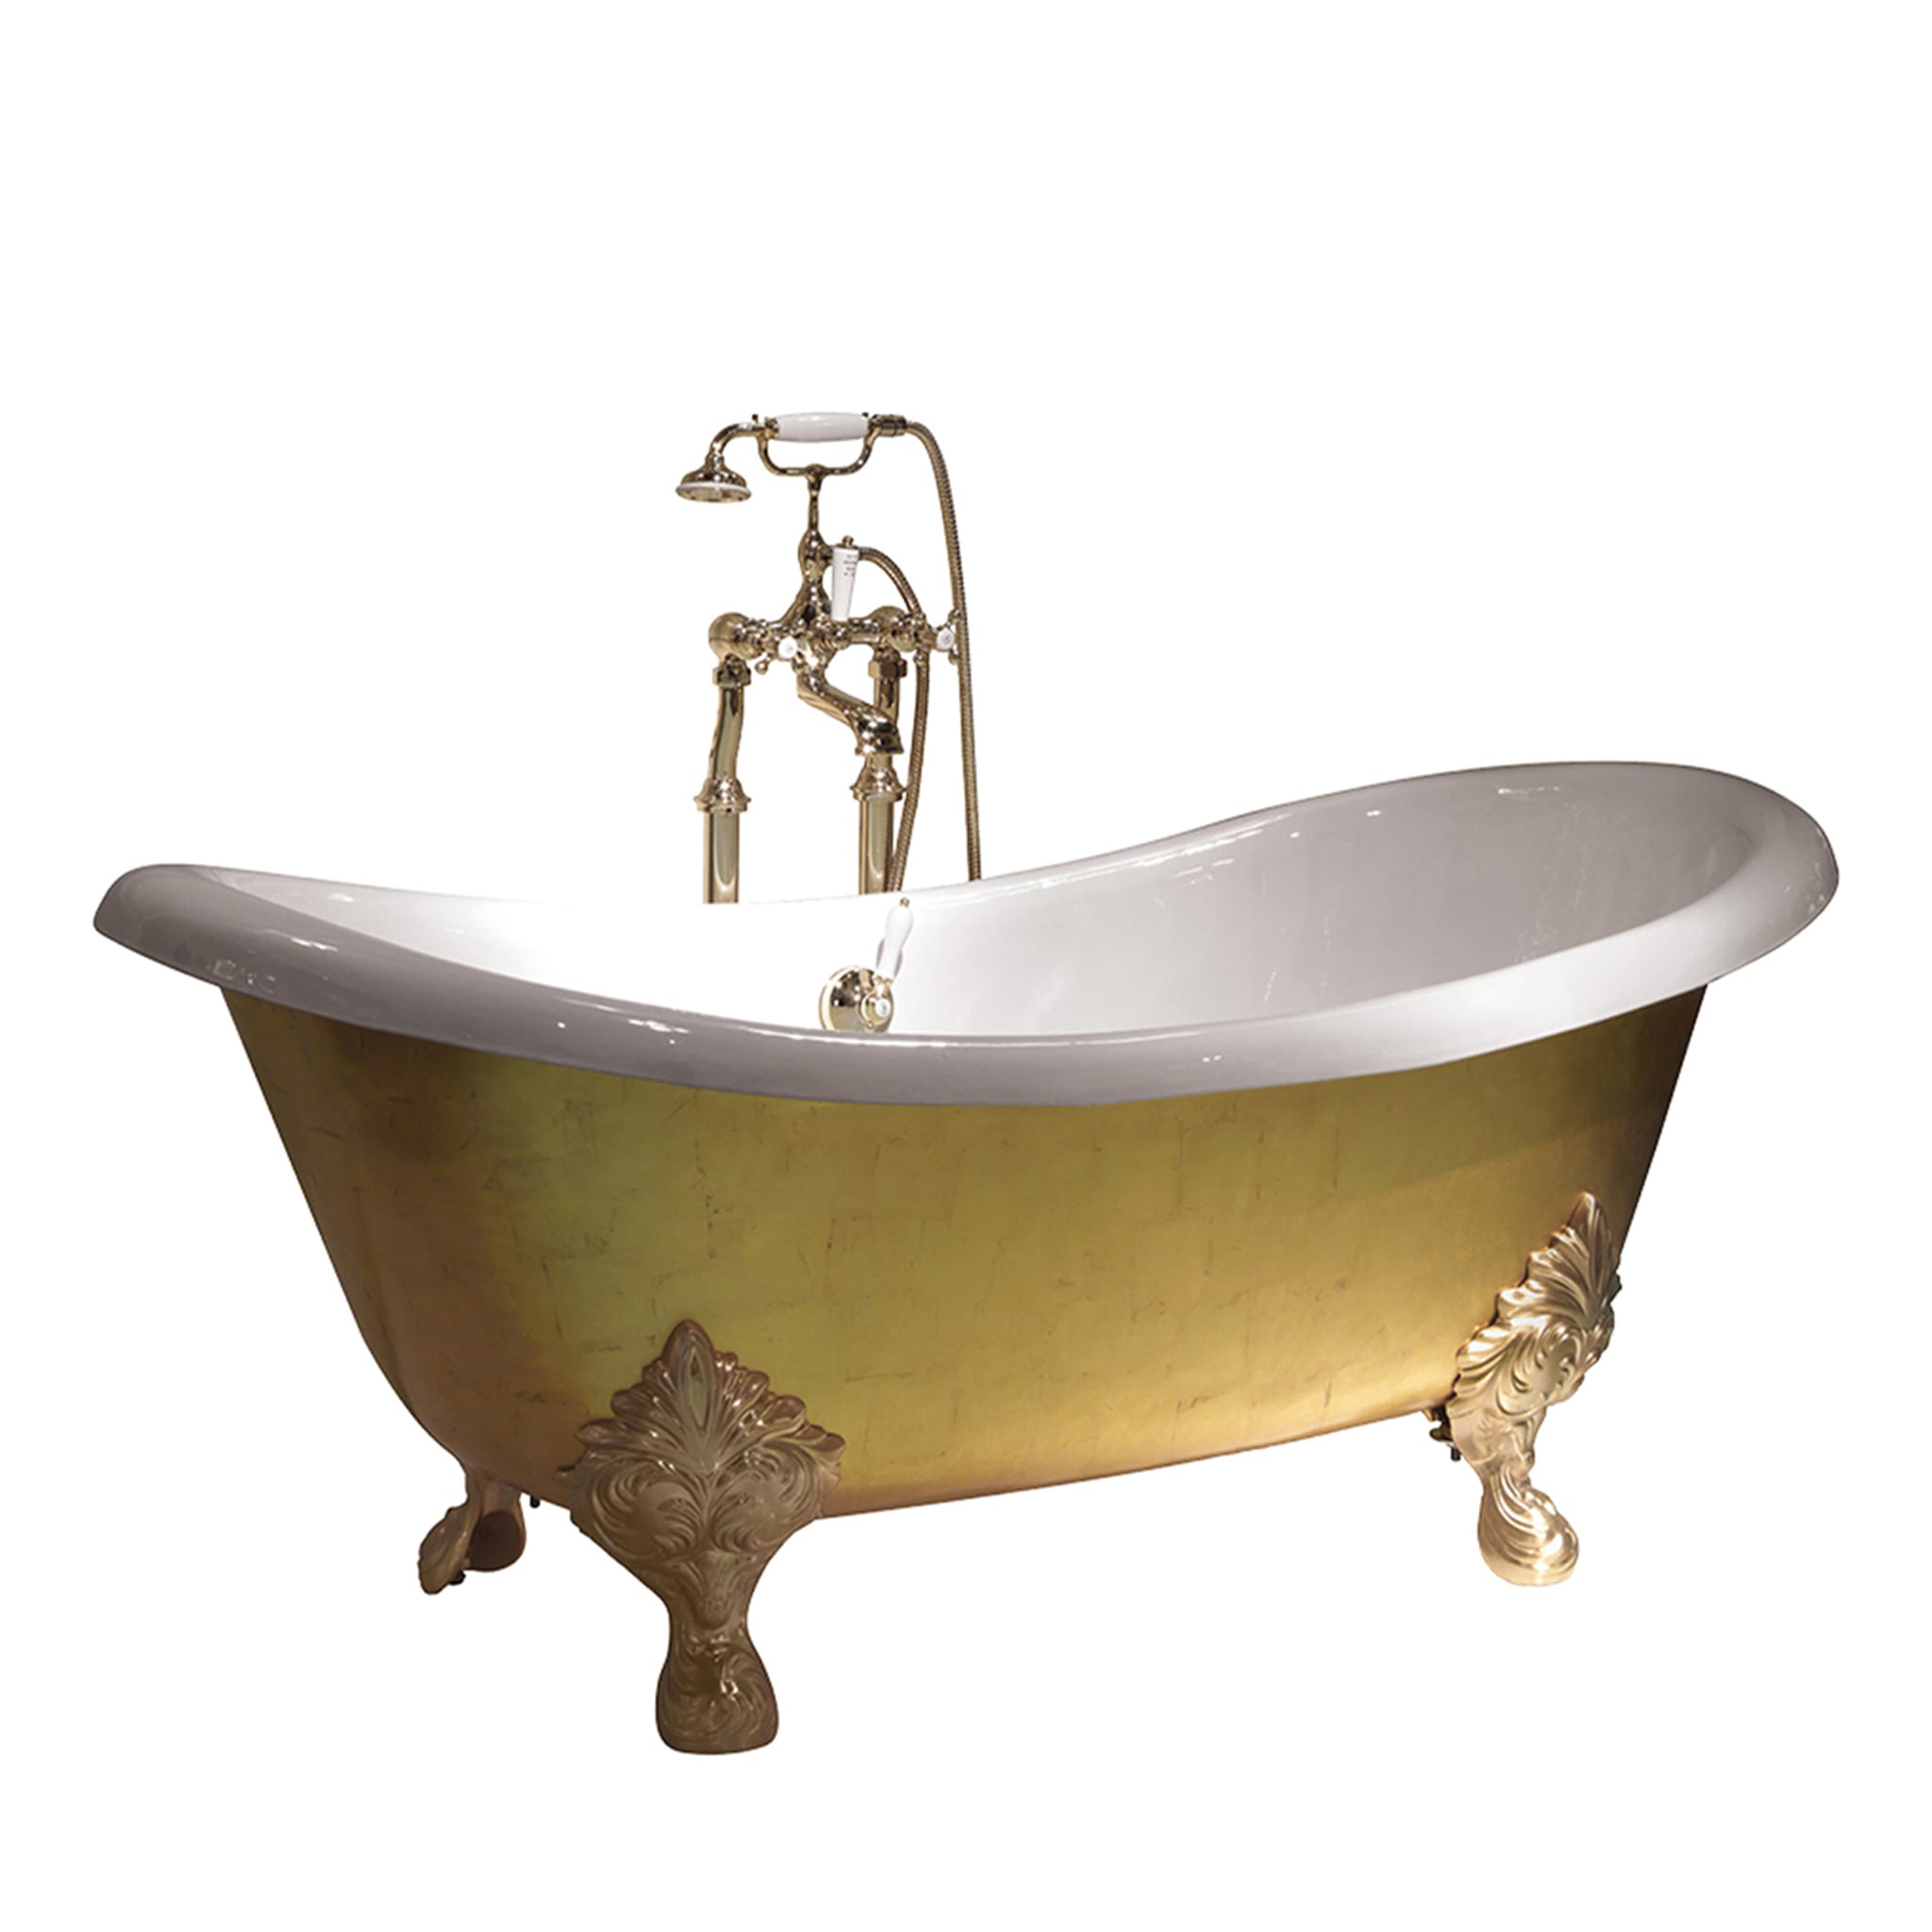 Mida Bathtub with Gold Leaf Applied by Hand - Main view